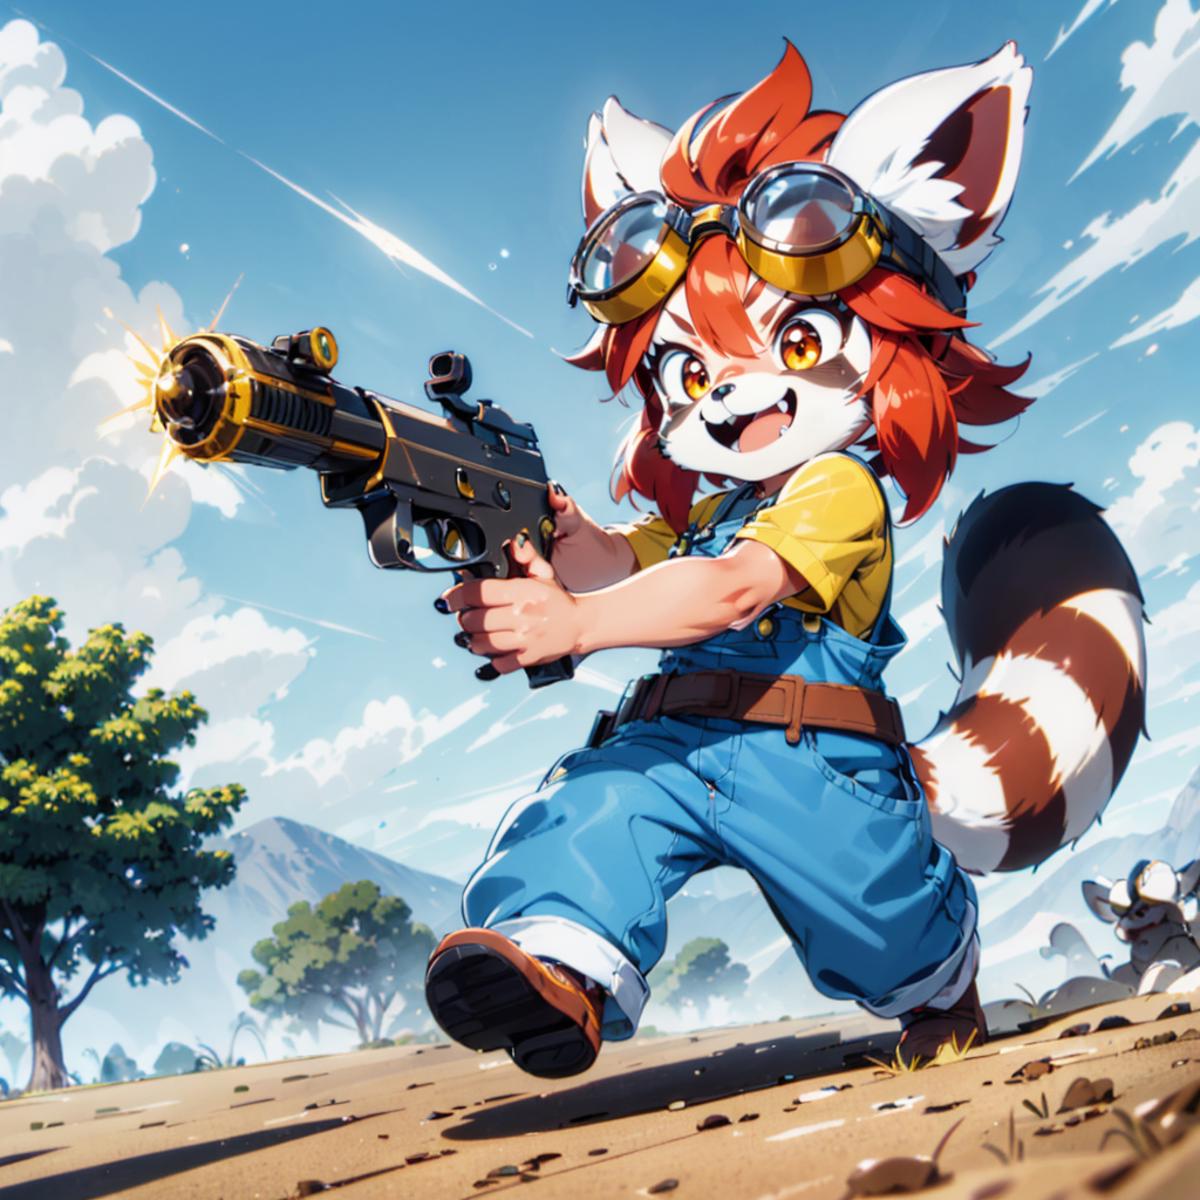 Nona from Gunfire Reborn (Game) image by jibunsagasinotabi